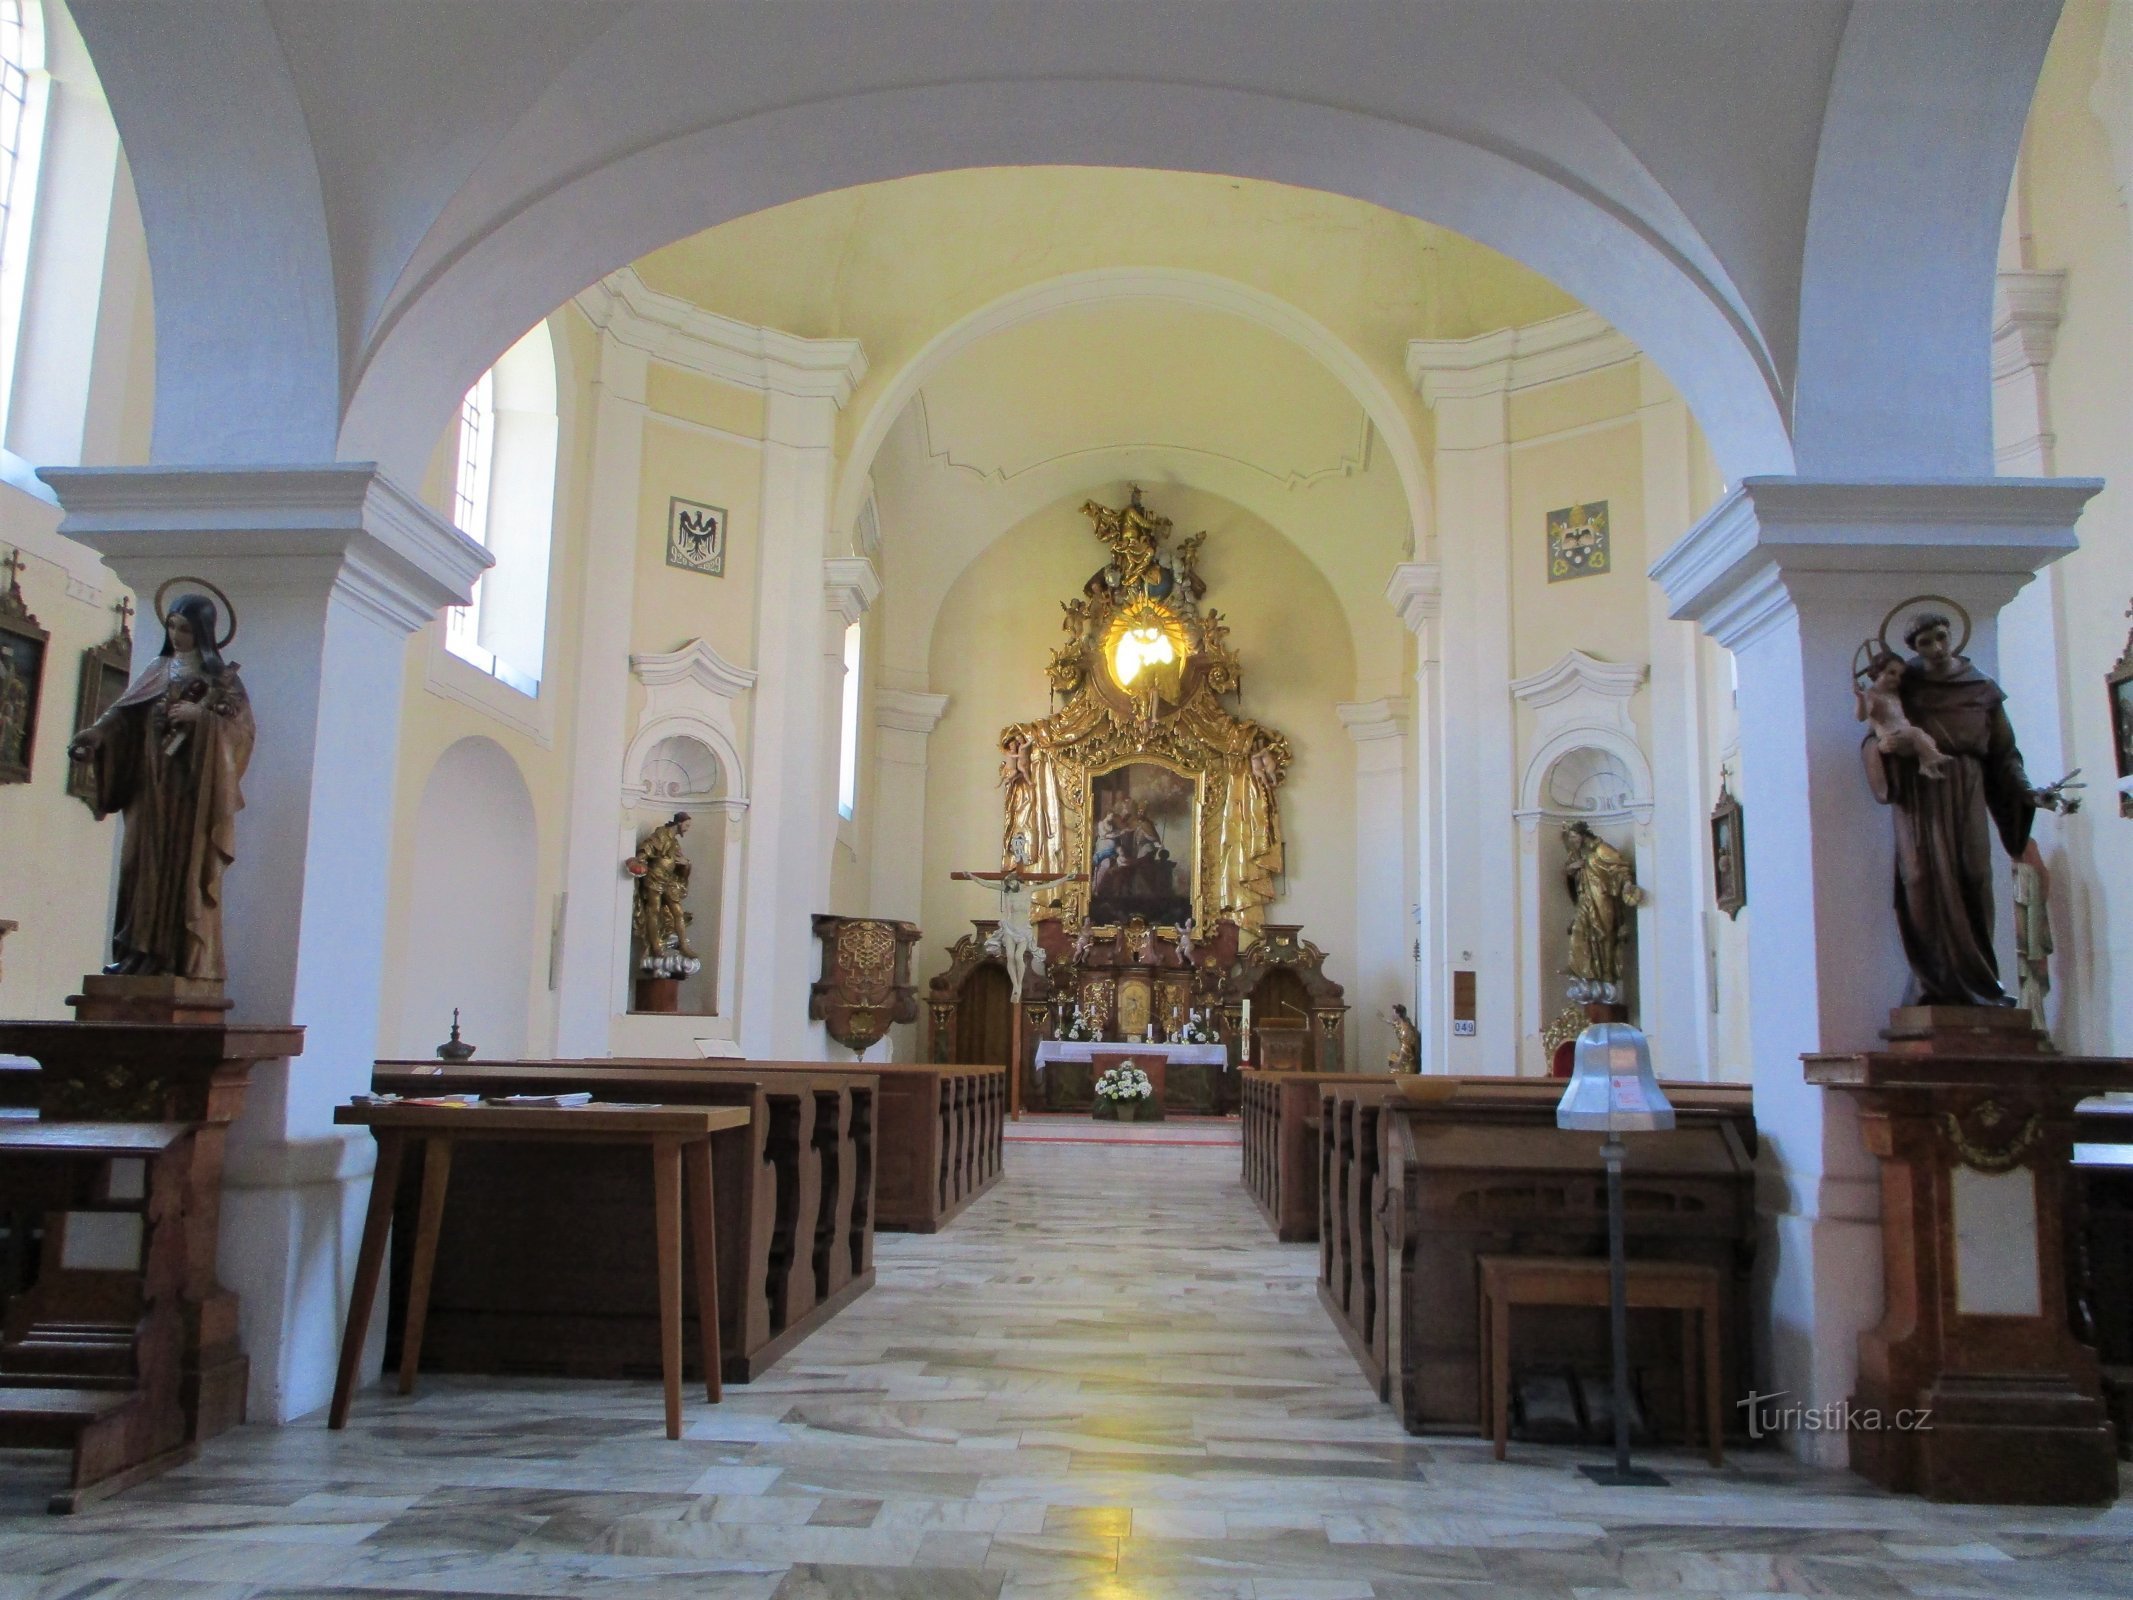 Interiør af kirken St. Martina (Holice, 16.5.2020/XNUMX/XNUMX)